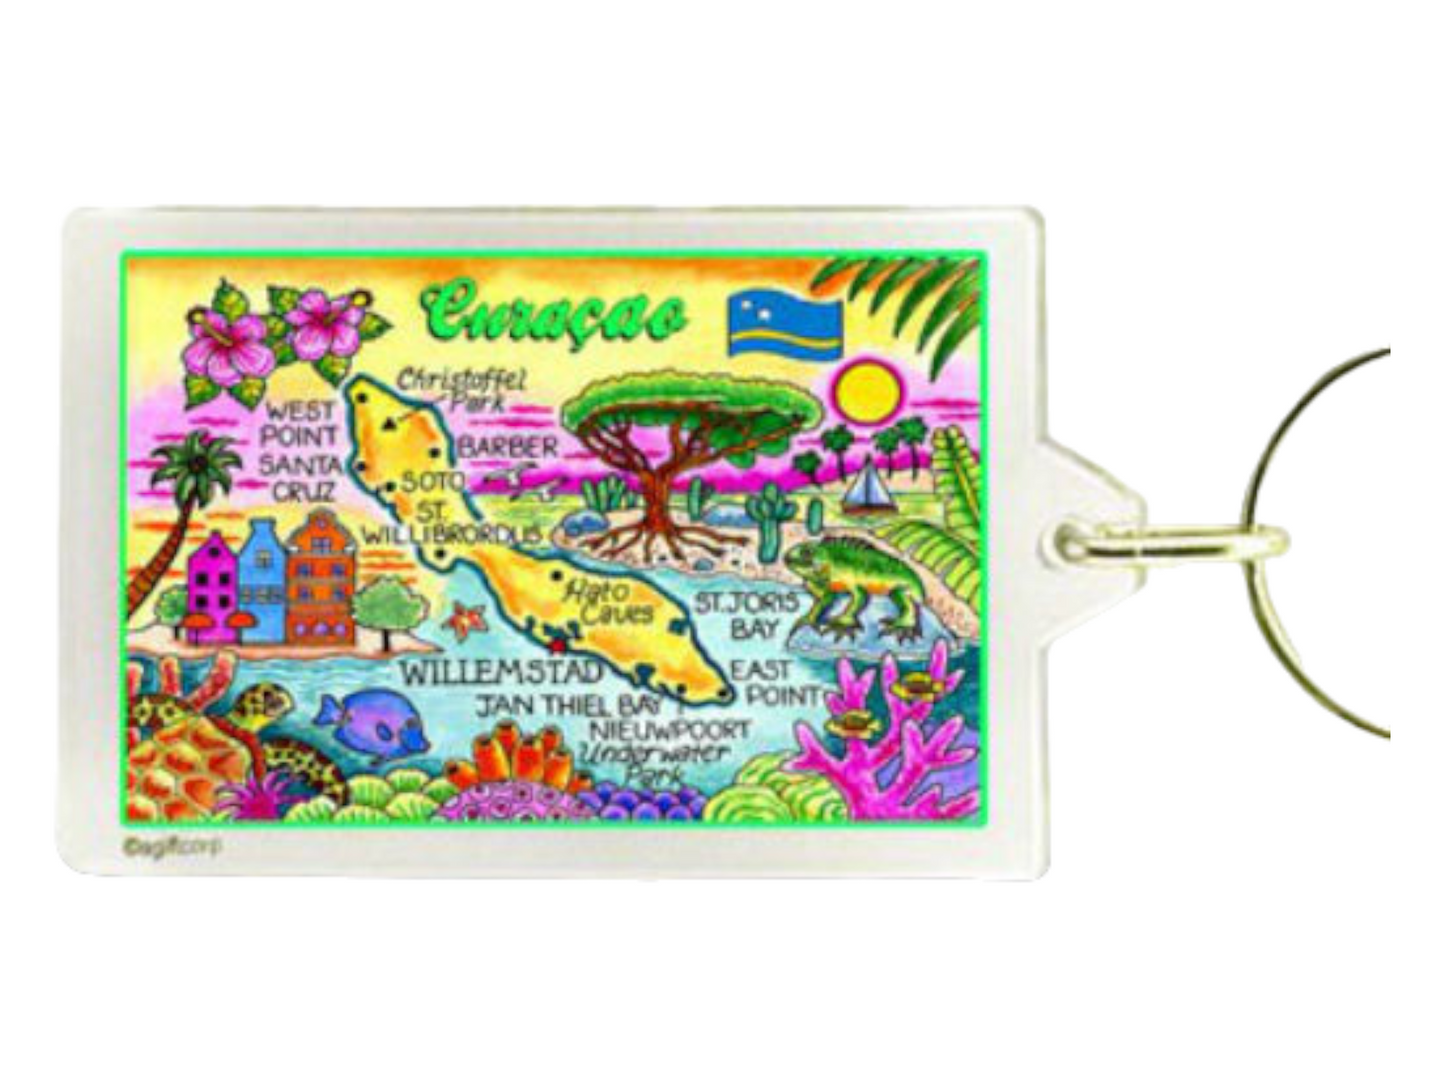 Curacao (Netherlands Antilles) Map Acrylic Rectangular Souvenir Keychain 2.5" X 1.5"